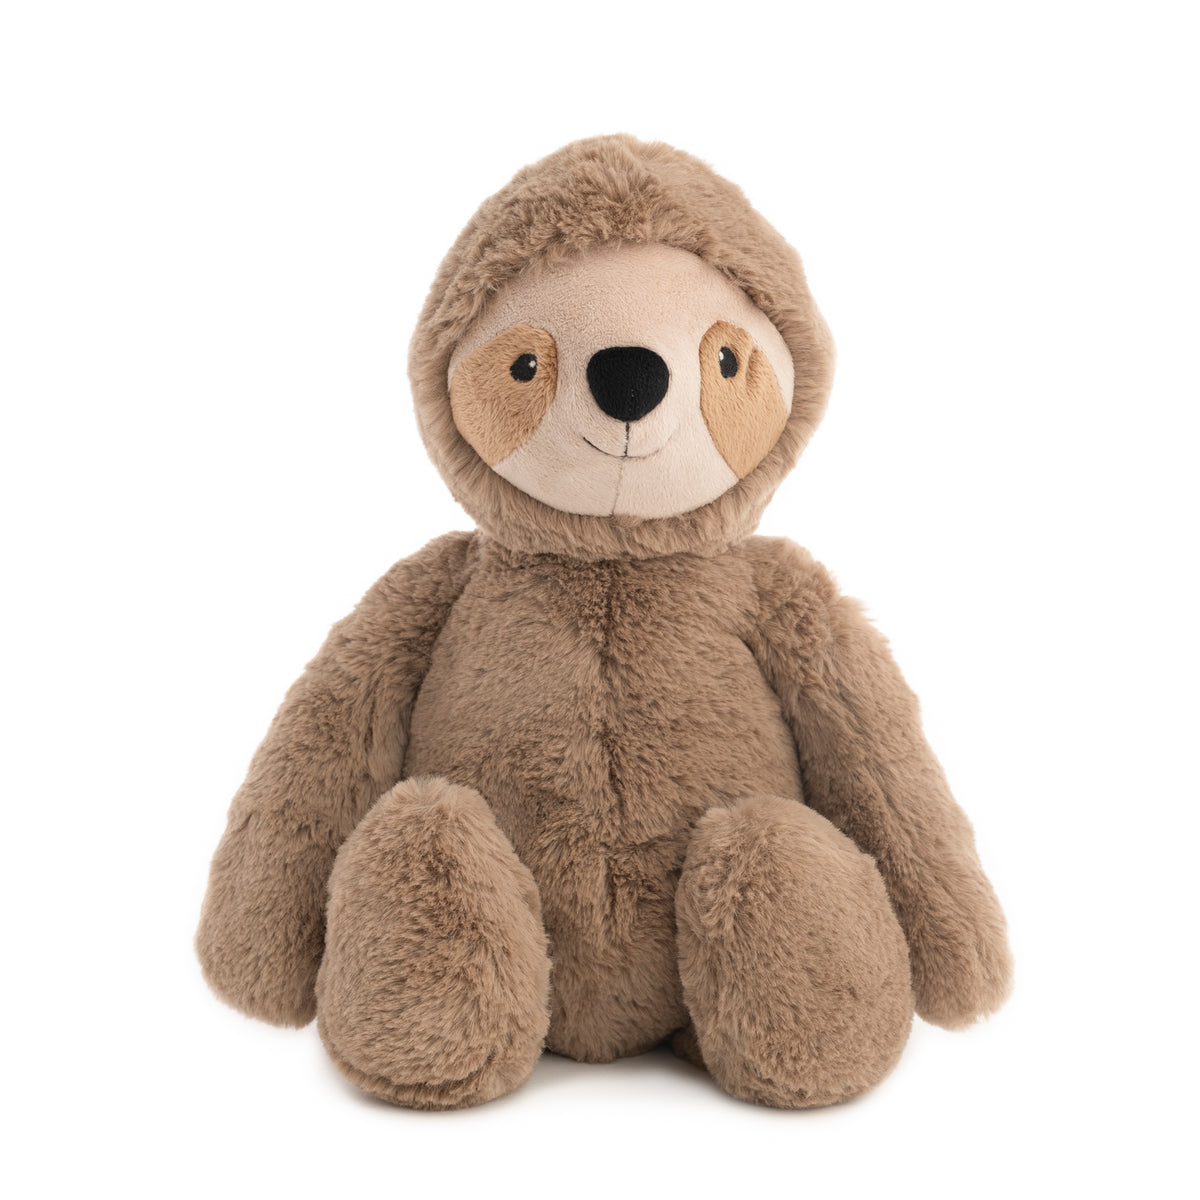 natureZoo XL Plush Teddy Bear – Brown Sloth